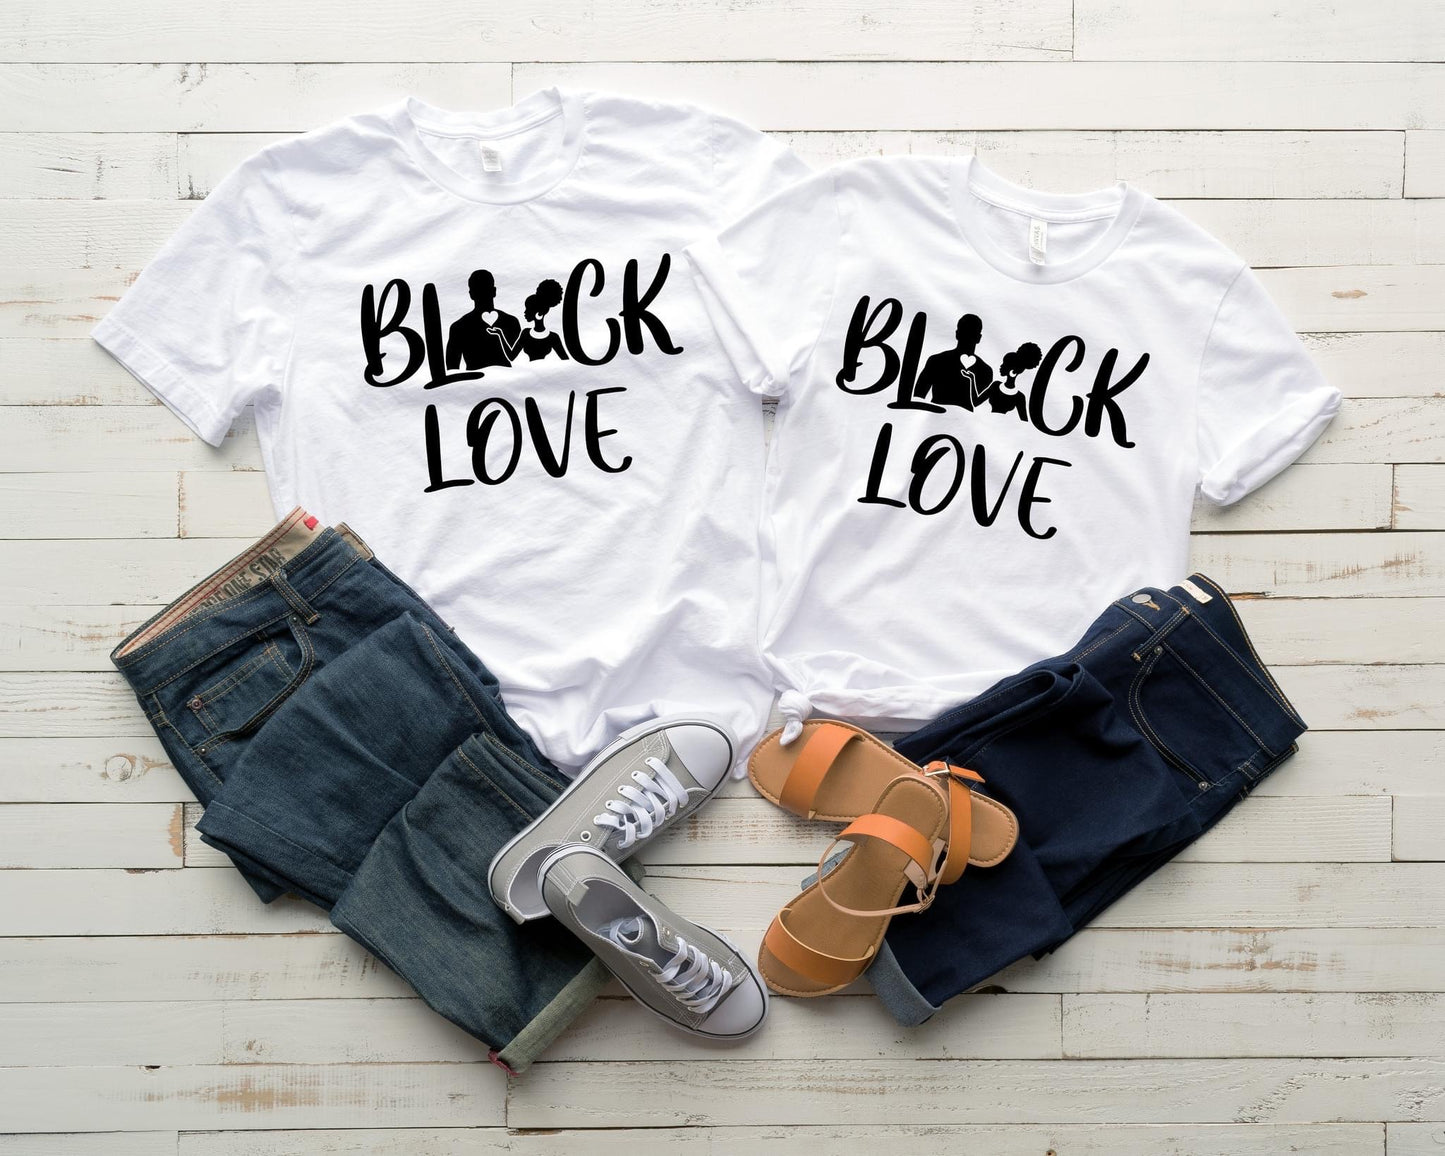 Black Love